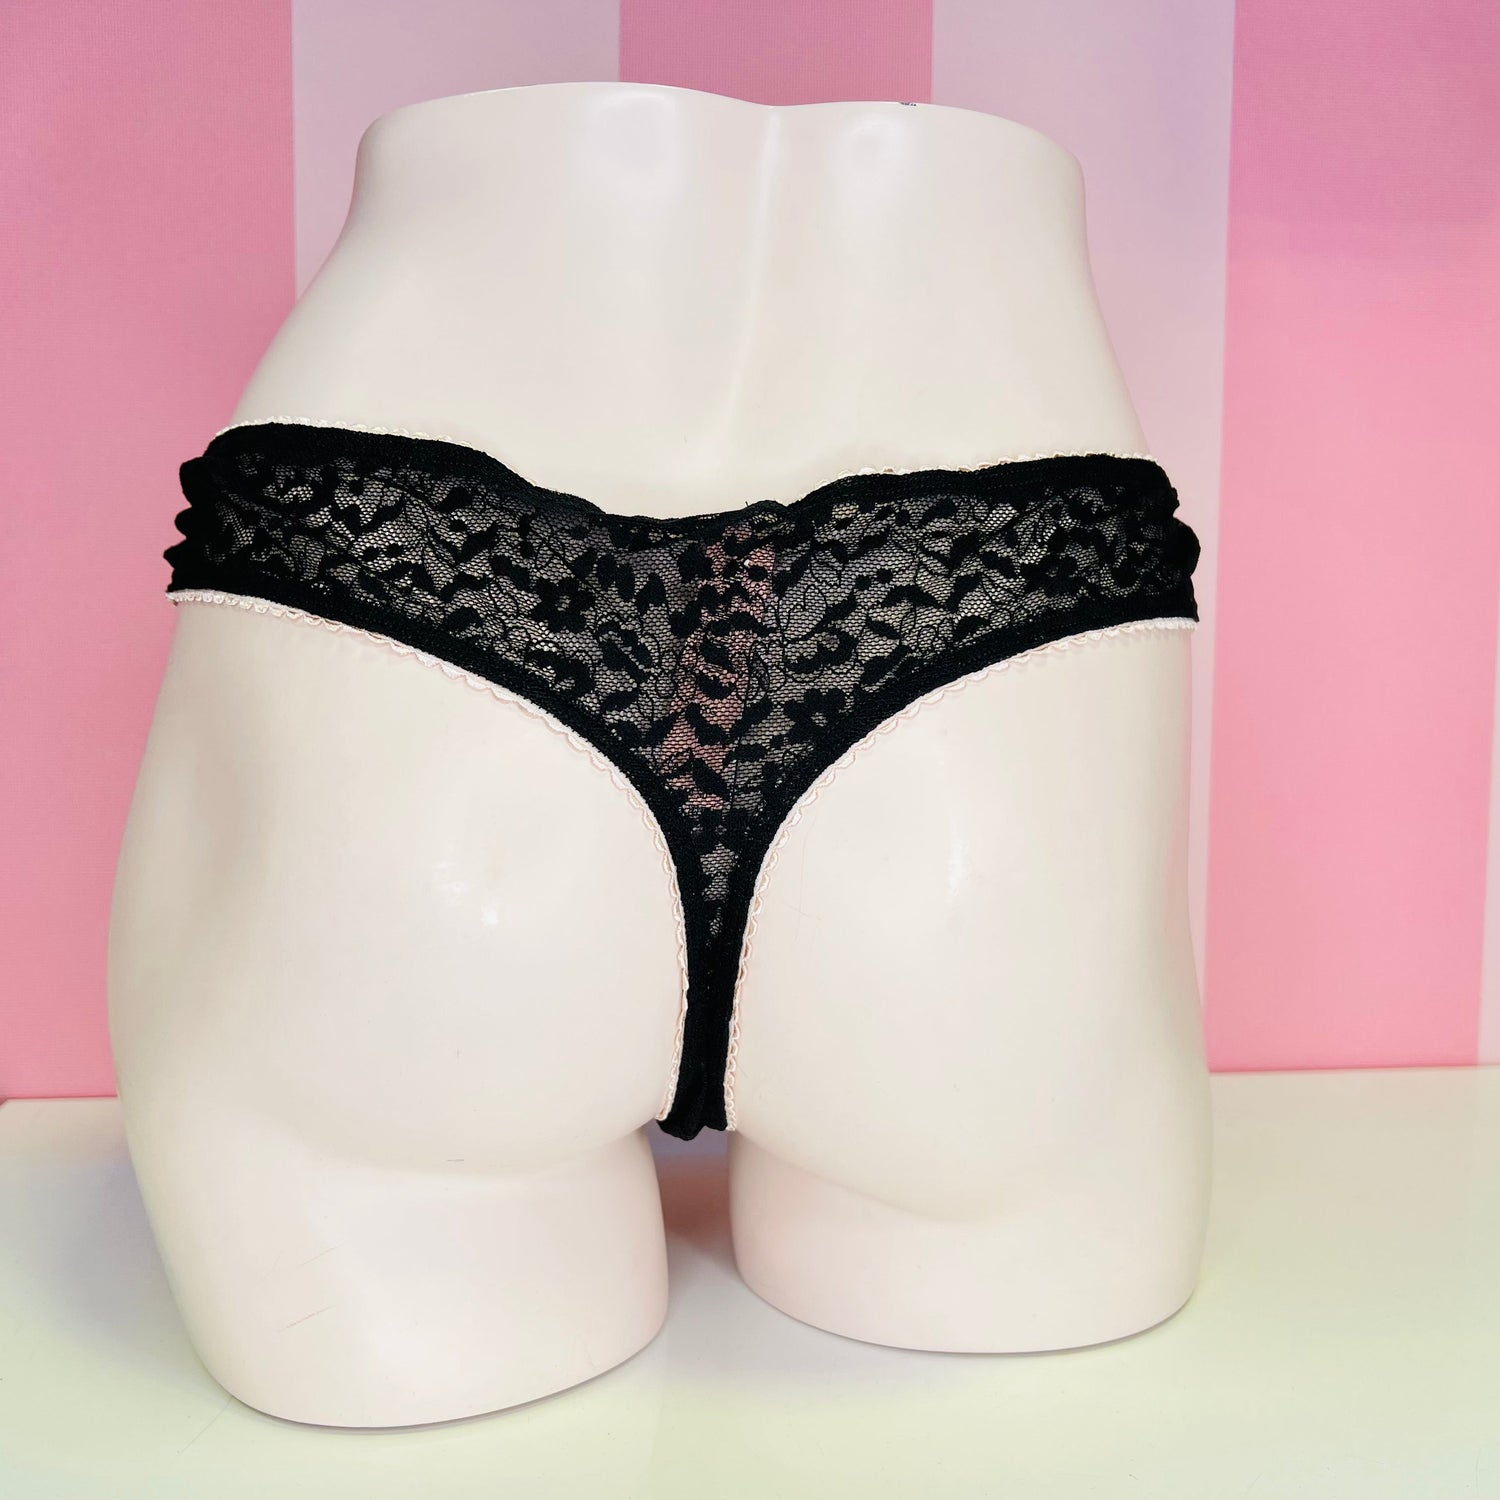 Krajkové kalhotky - XL / Černá / Nové se štítky - Tanga Victoria’s Secret